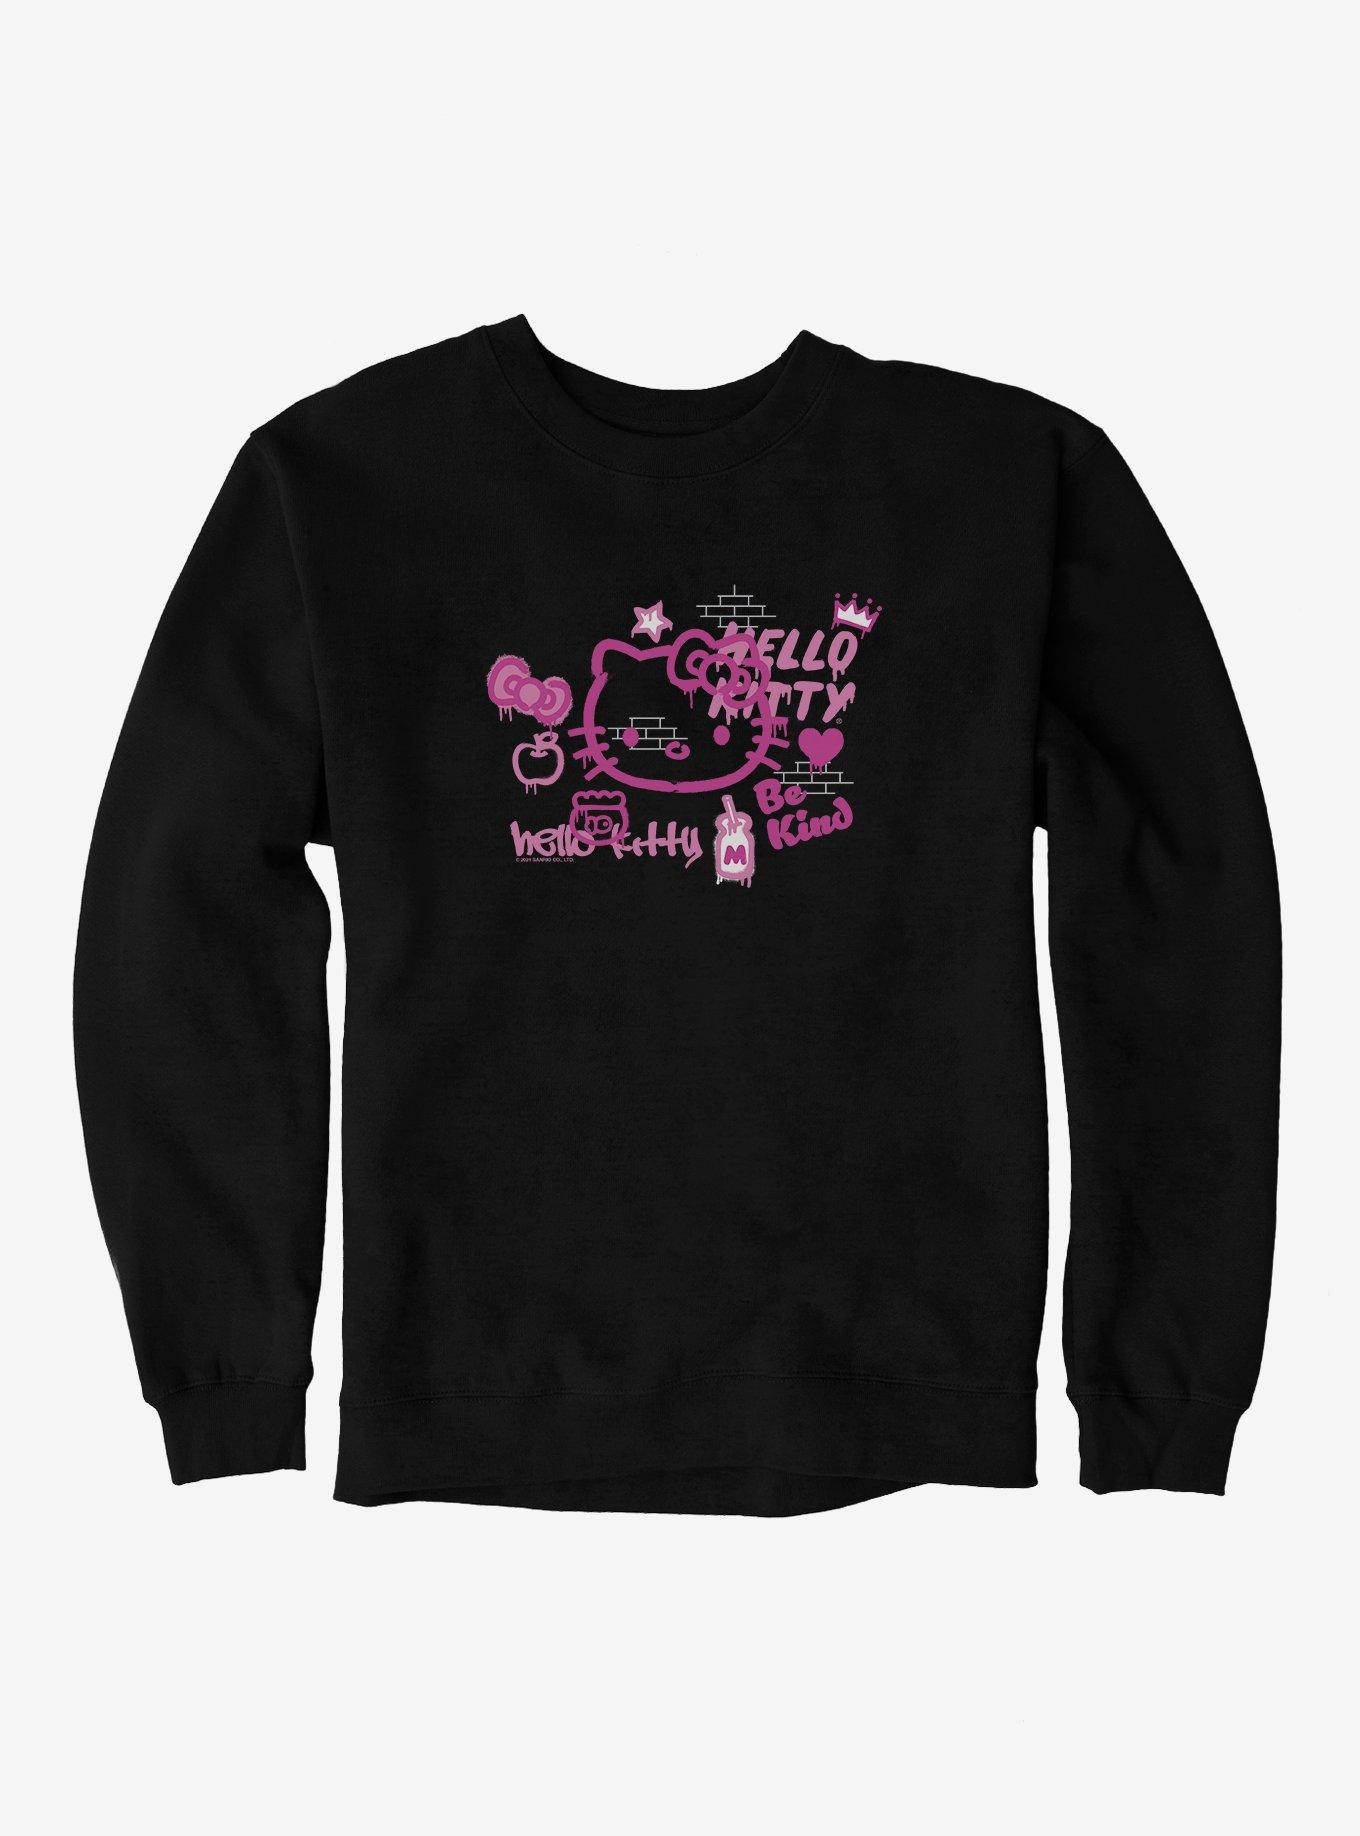 Hello Kitty Be Kind Sweatshirt, , hi-res